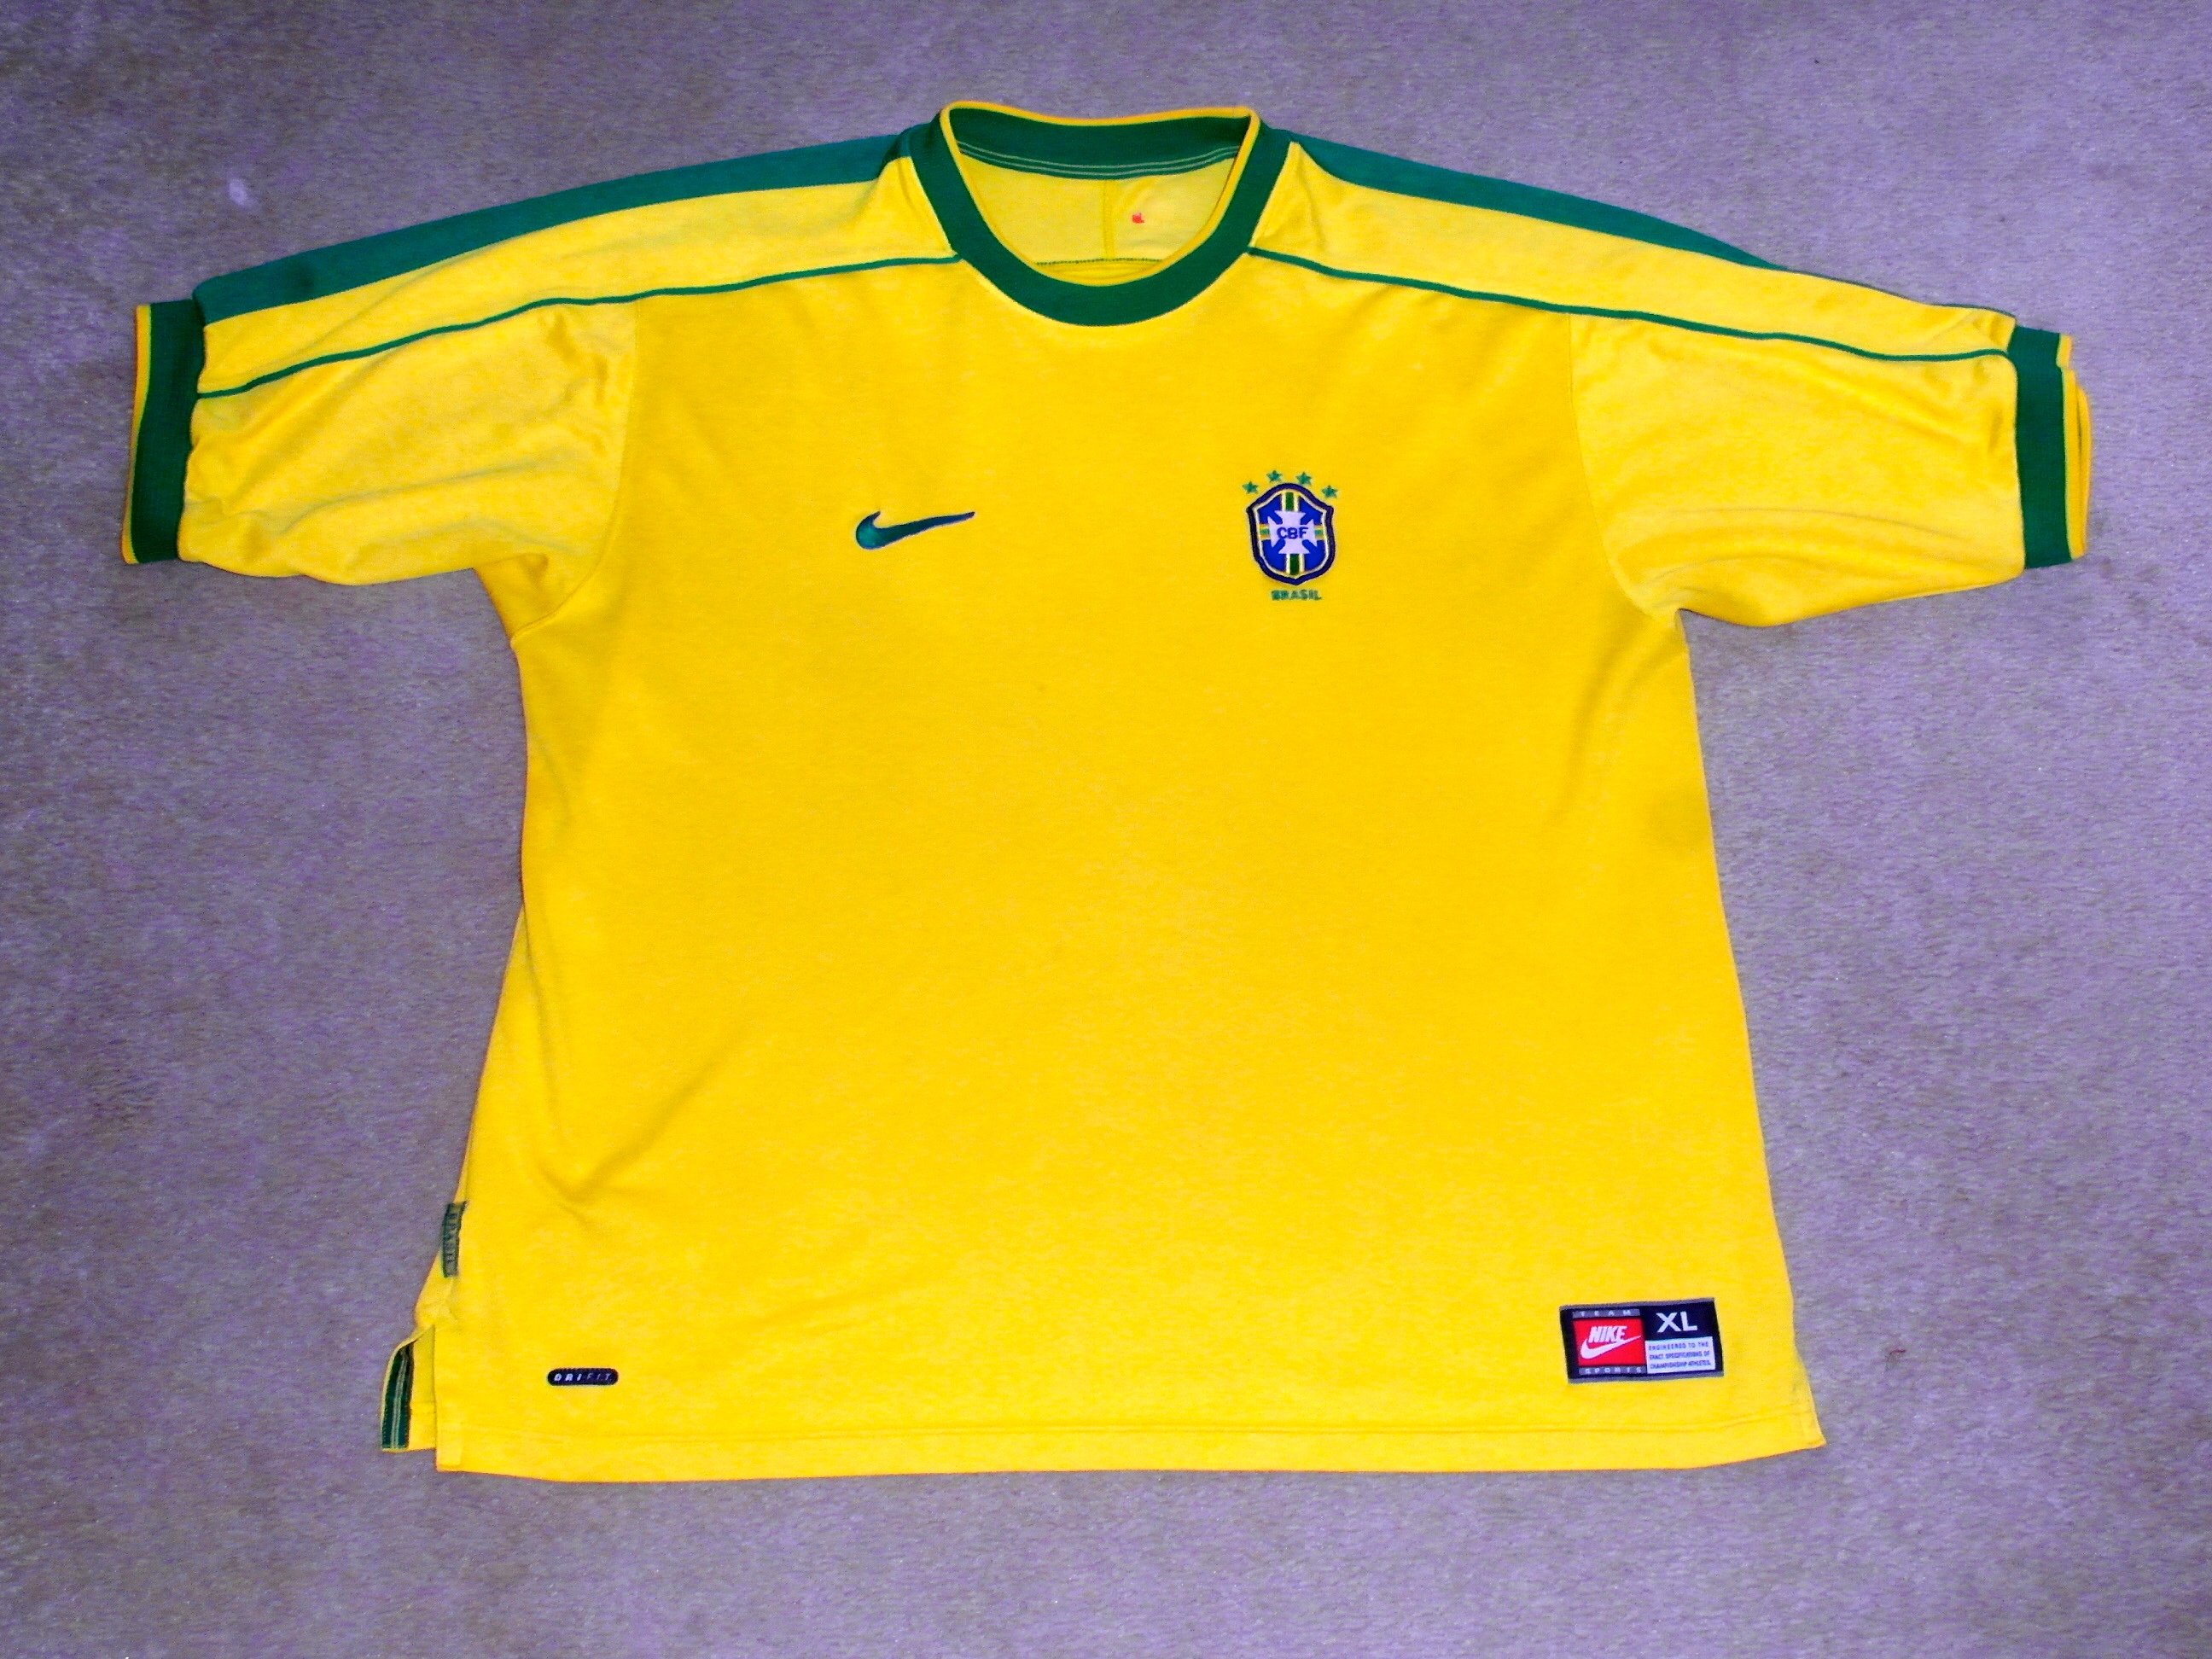 brazil 98 jersey